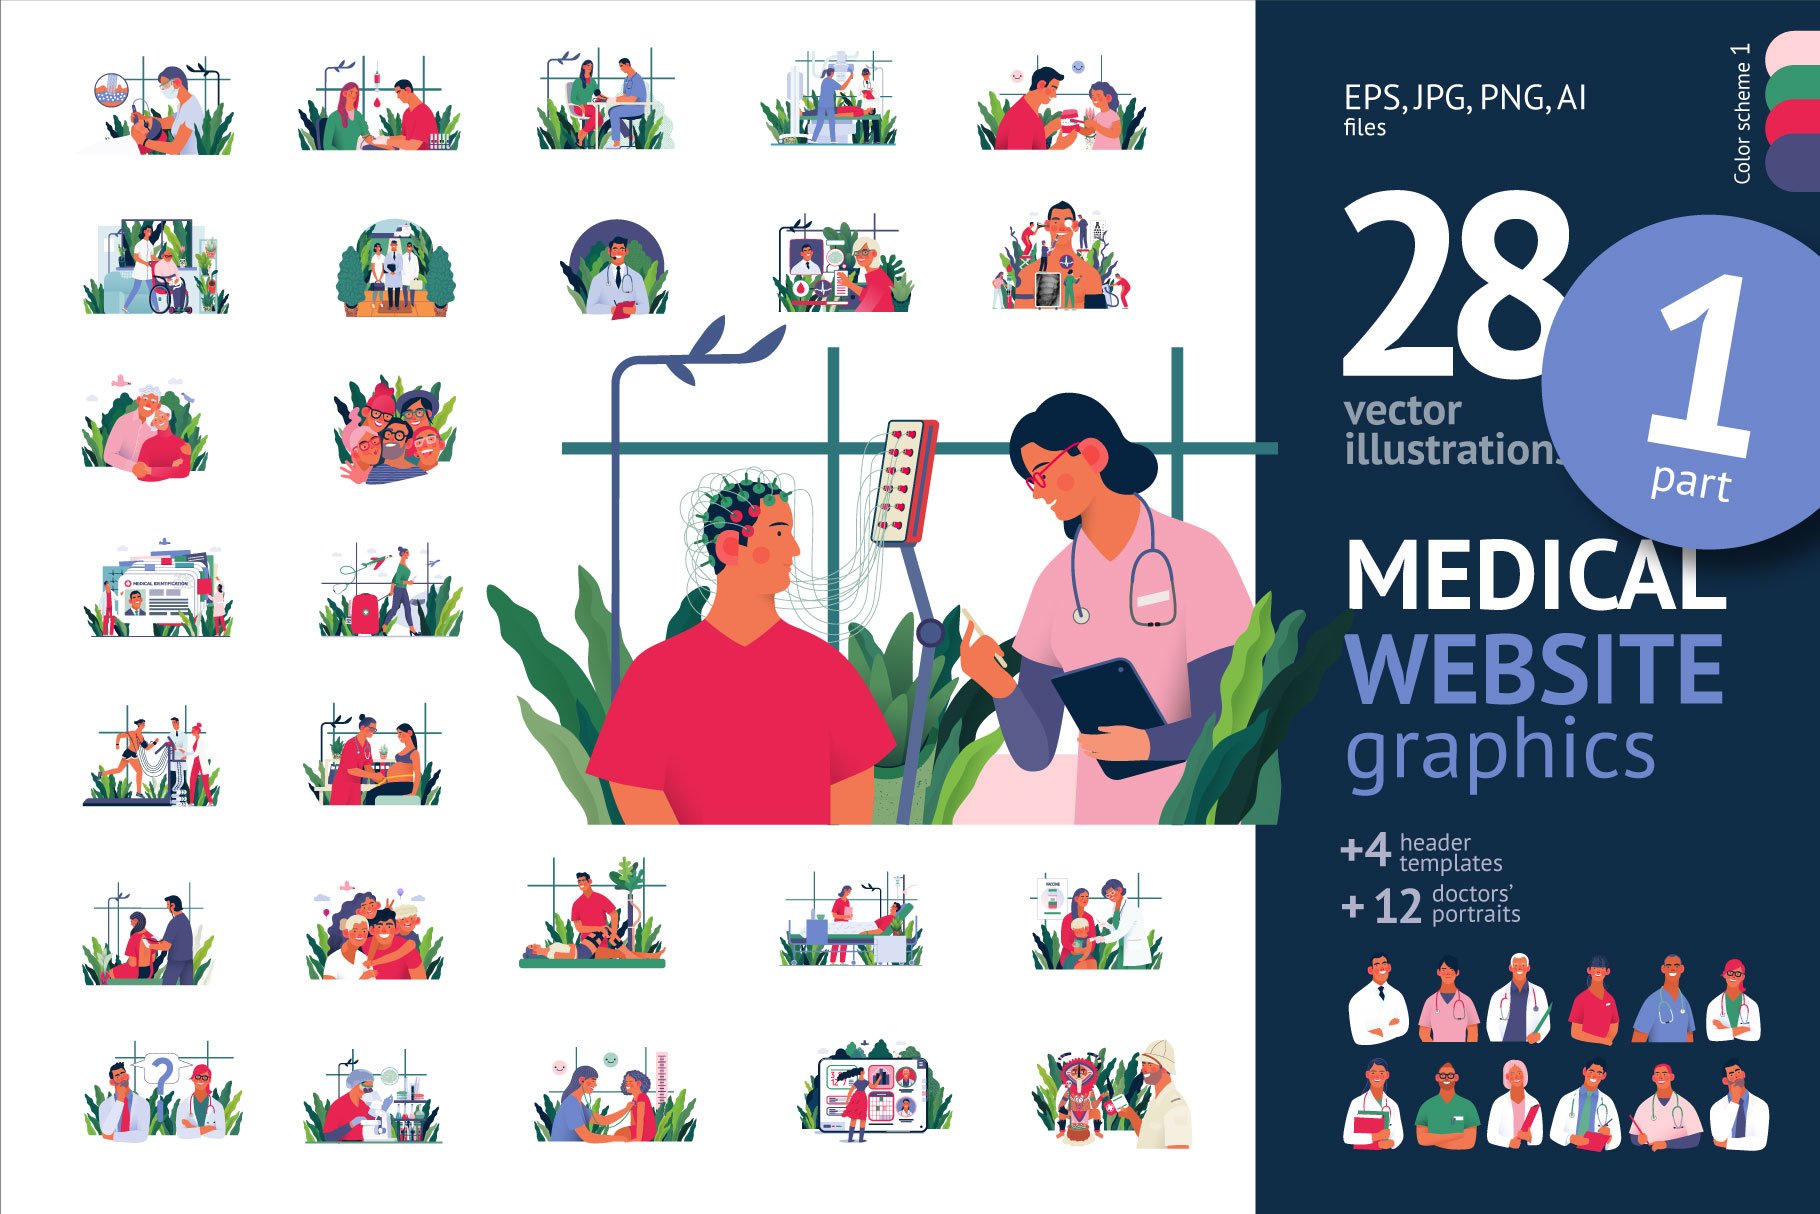 Part 1 Medical website illustrations cover image.